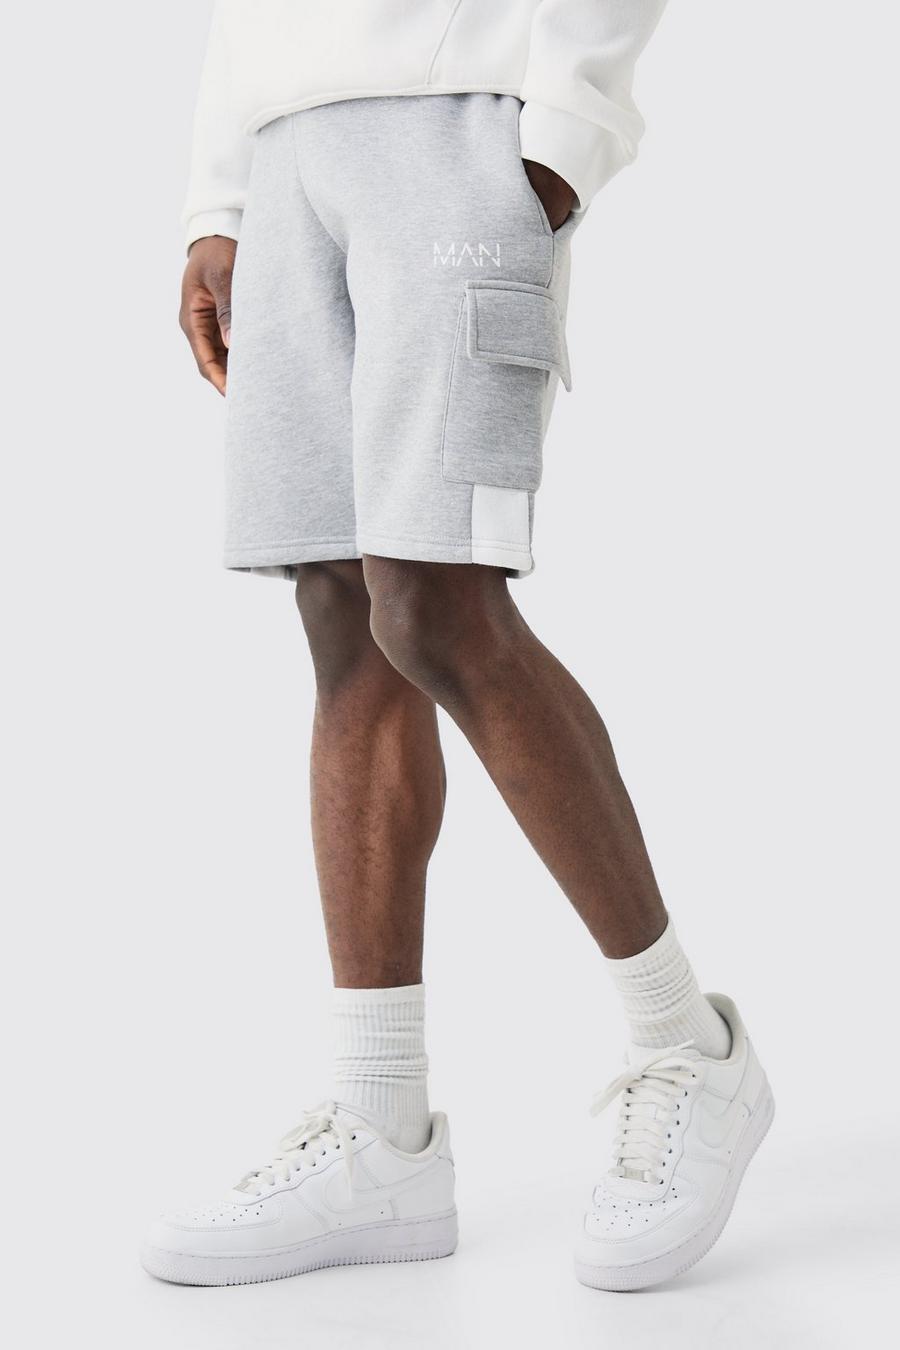 Grey Man Gusset Colour Block Pixel Camo Slim Mid Length Shorts Leggings image number 1